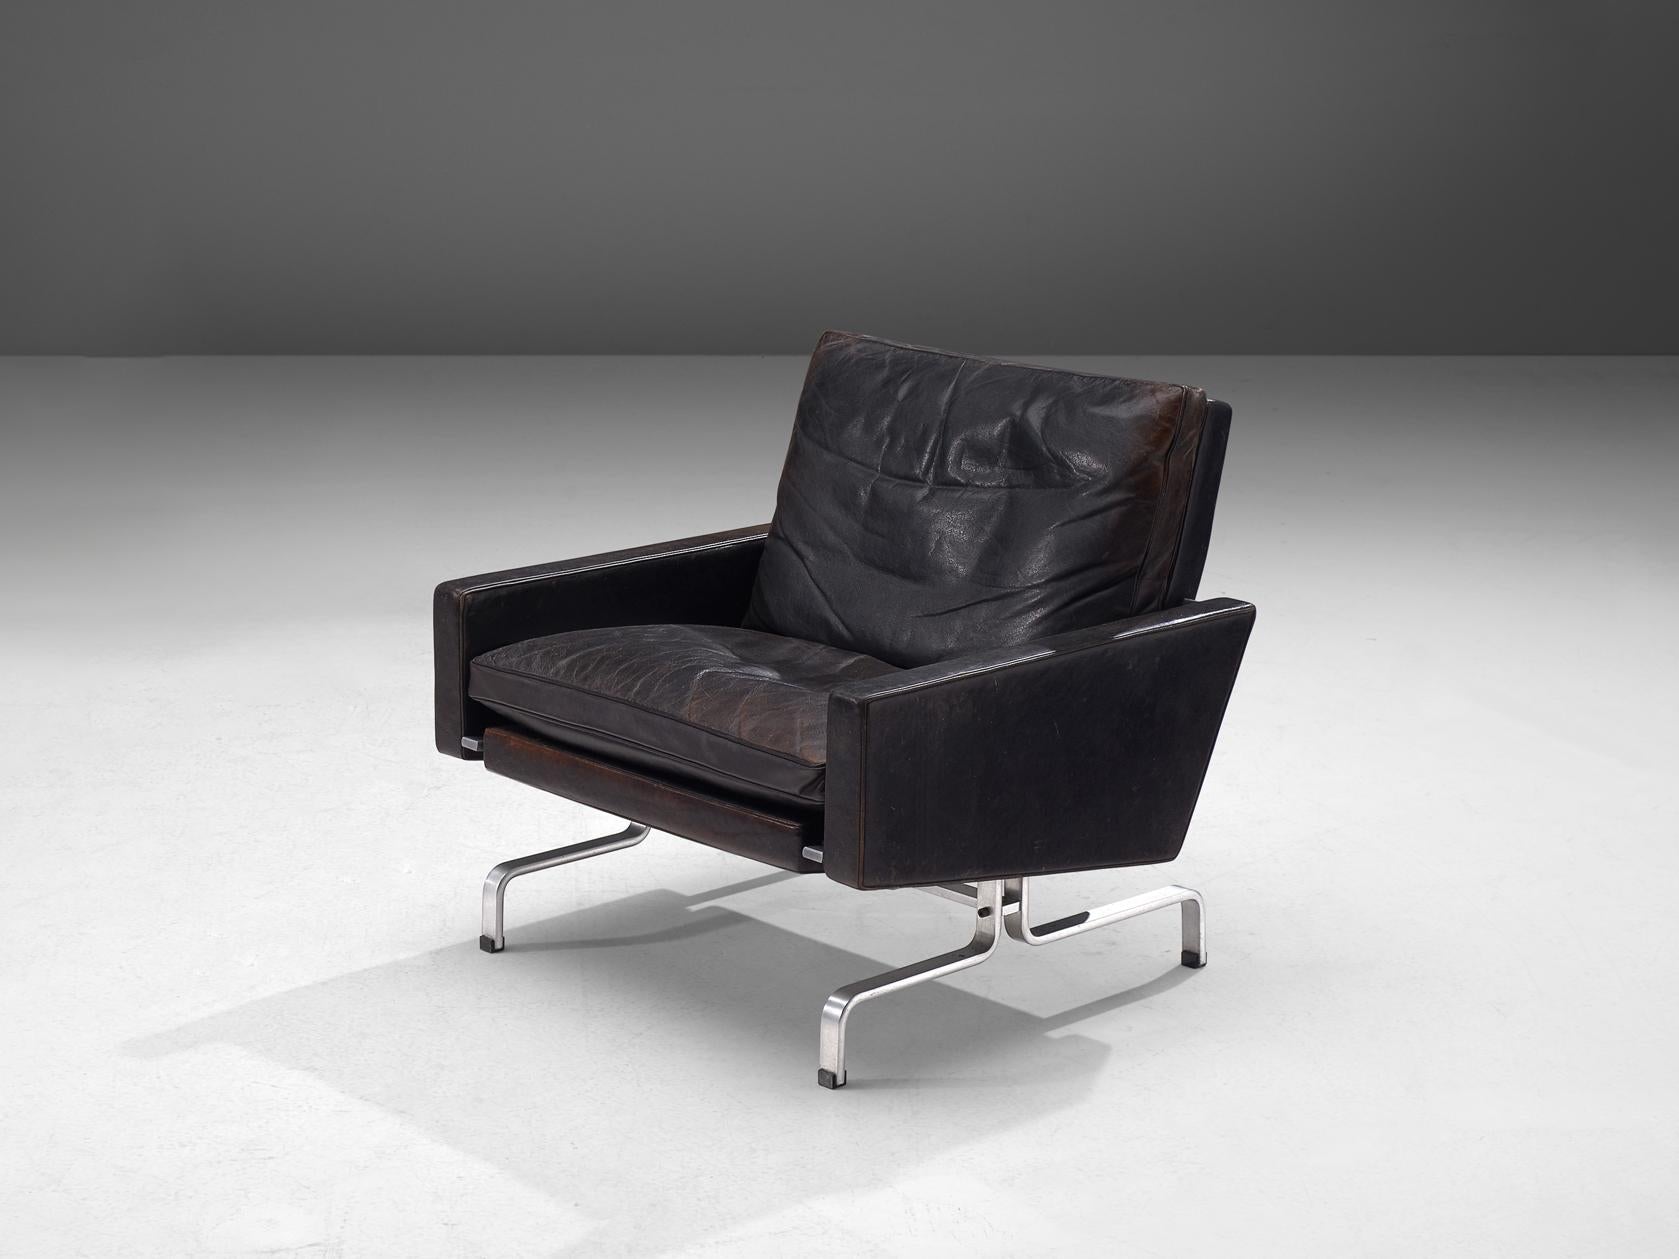 Poul Kjærholm 'PK31-1' Lounge Chair in Original Black Leather and Steel